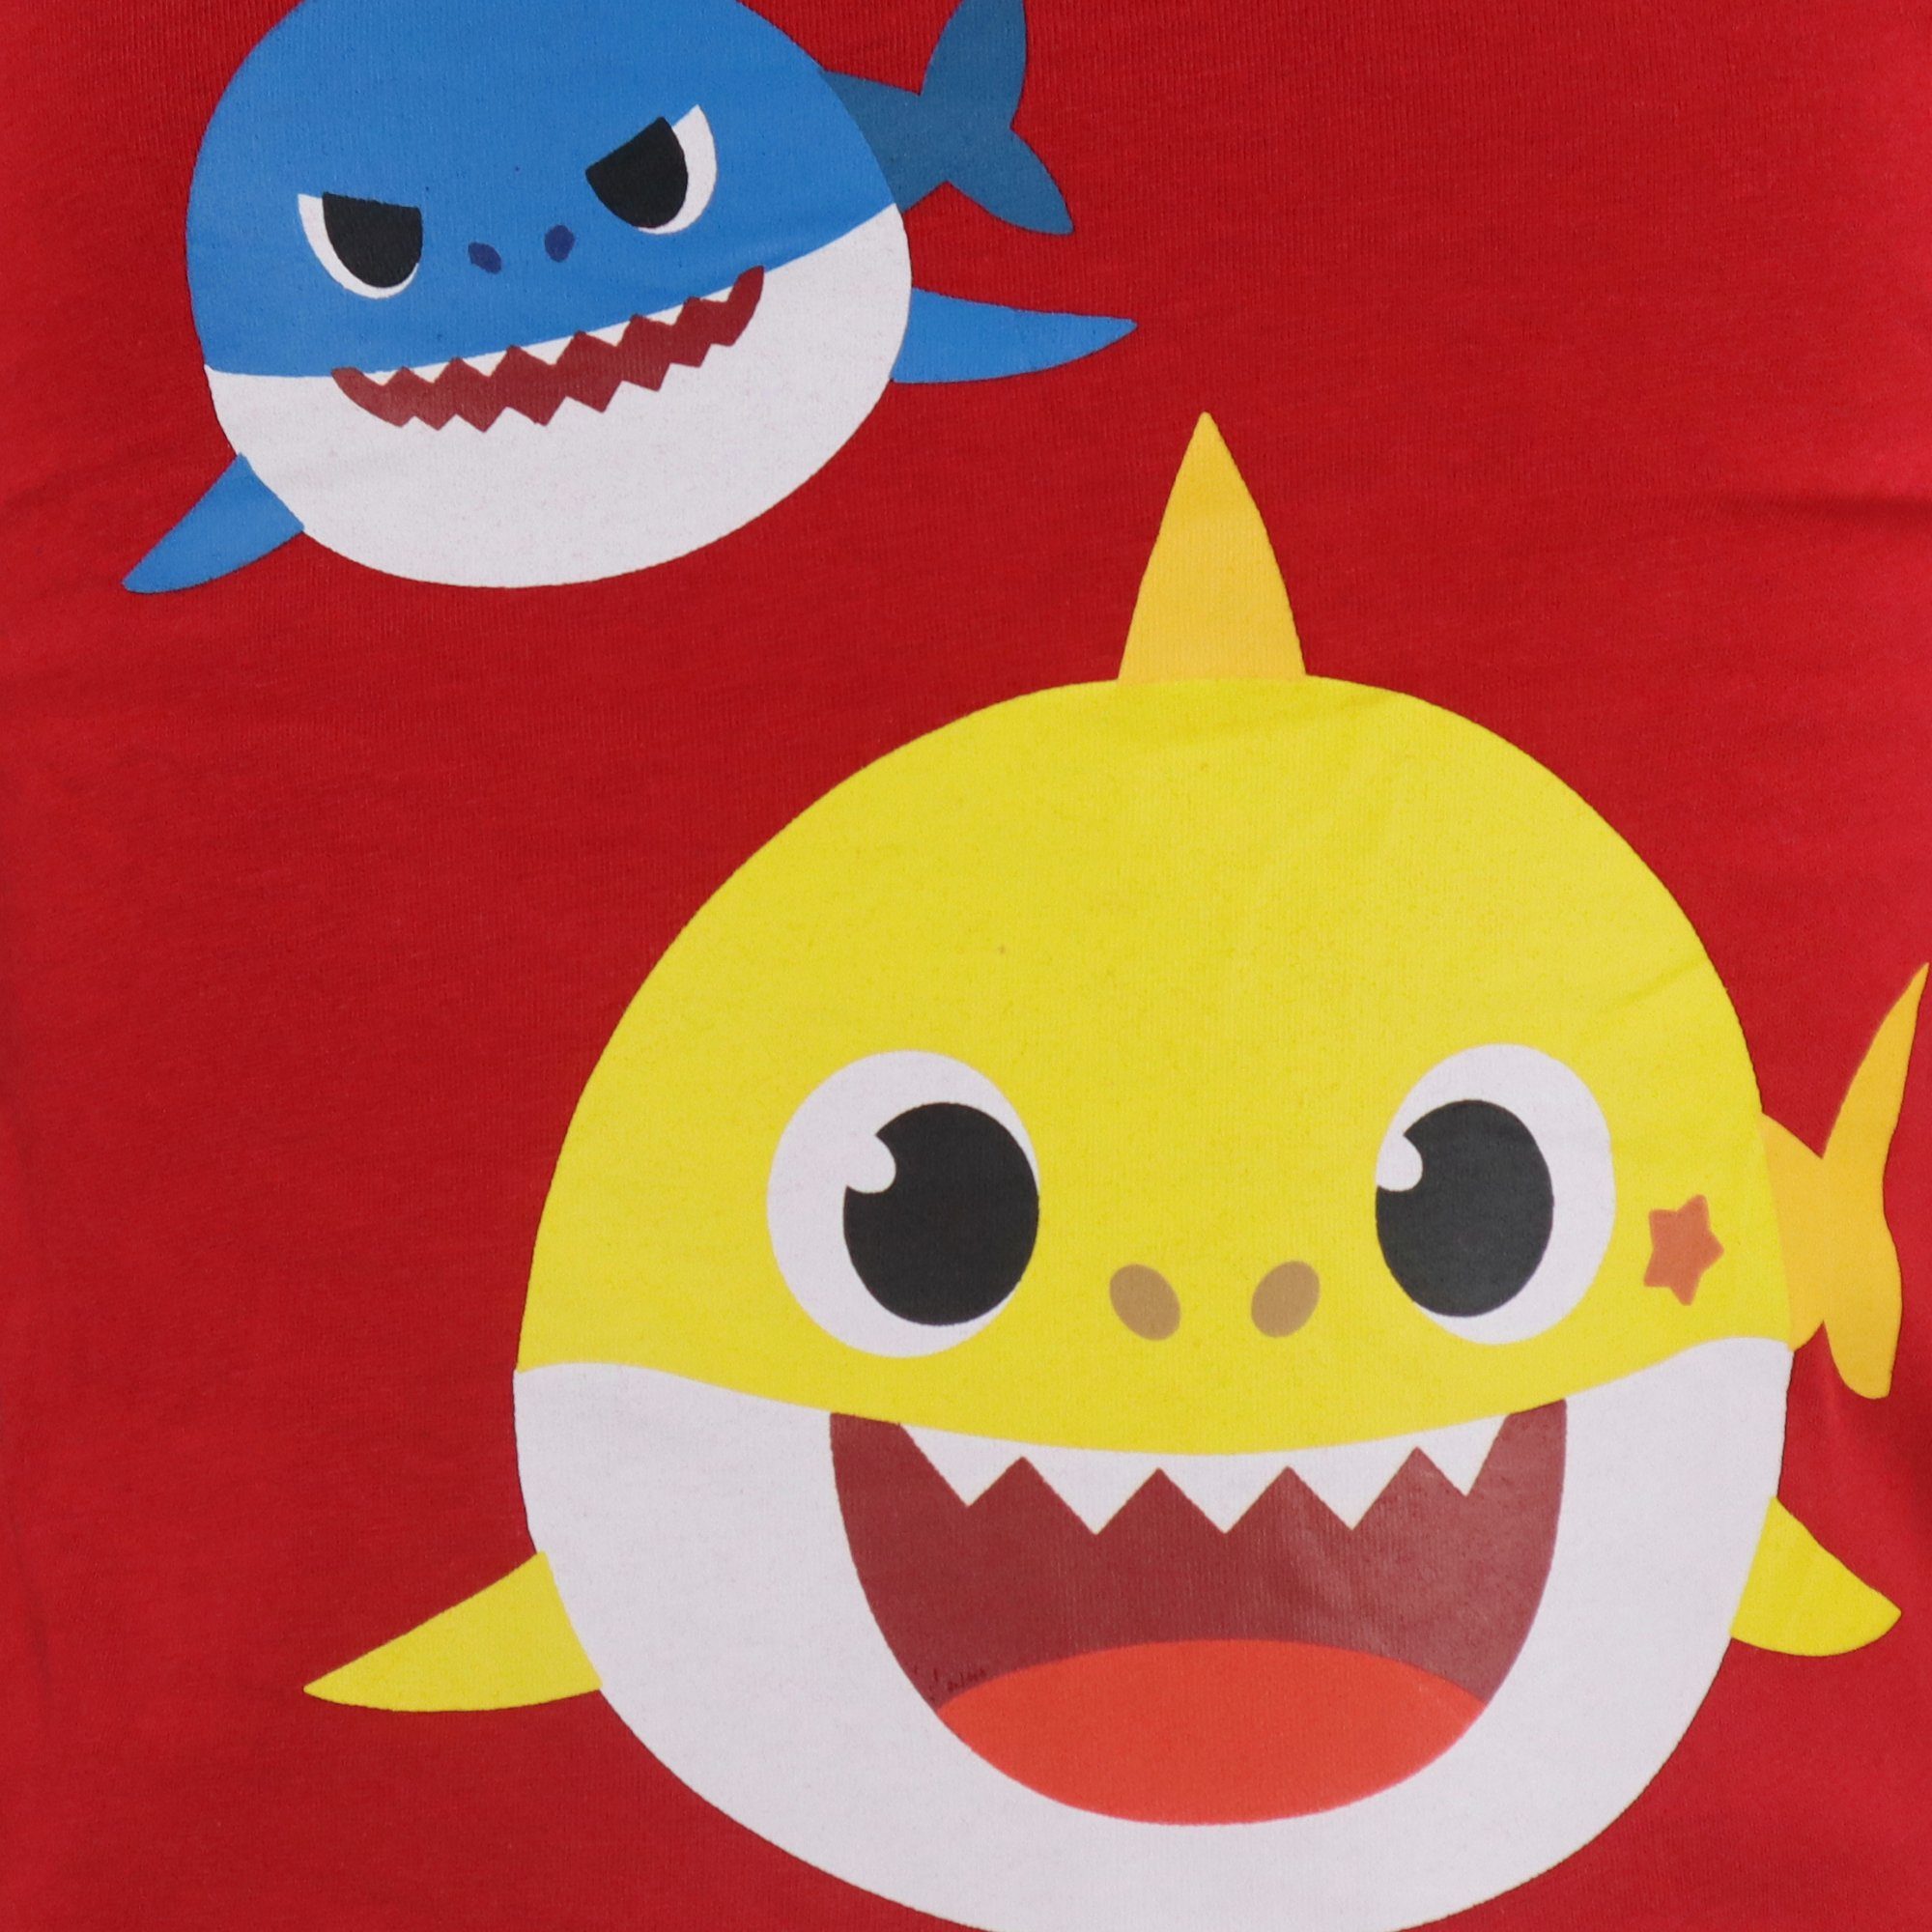 langarm 100% 116, Kinder Shirt Gr. 92 Jungen Baby Shark Hai Shark bis Langarmshirt Baby Rot Baumwolle Baby